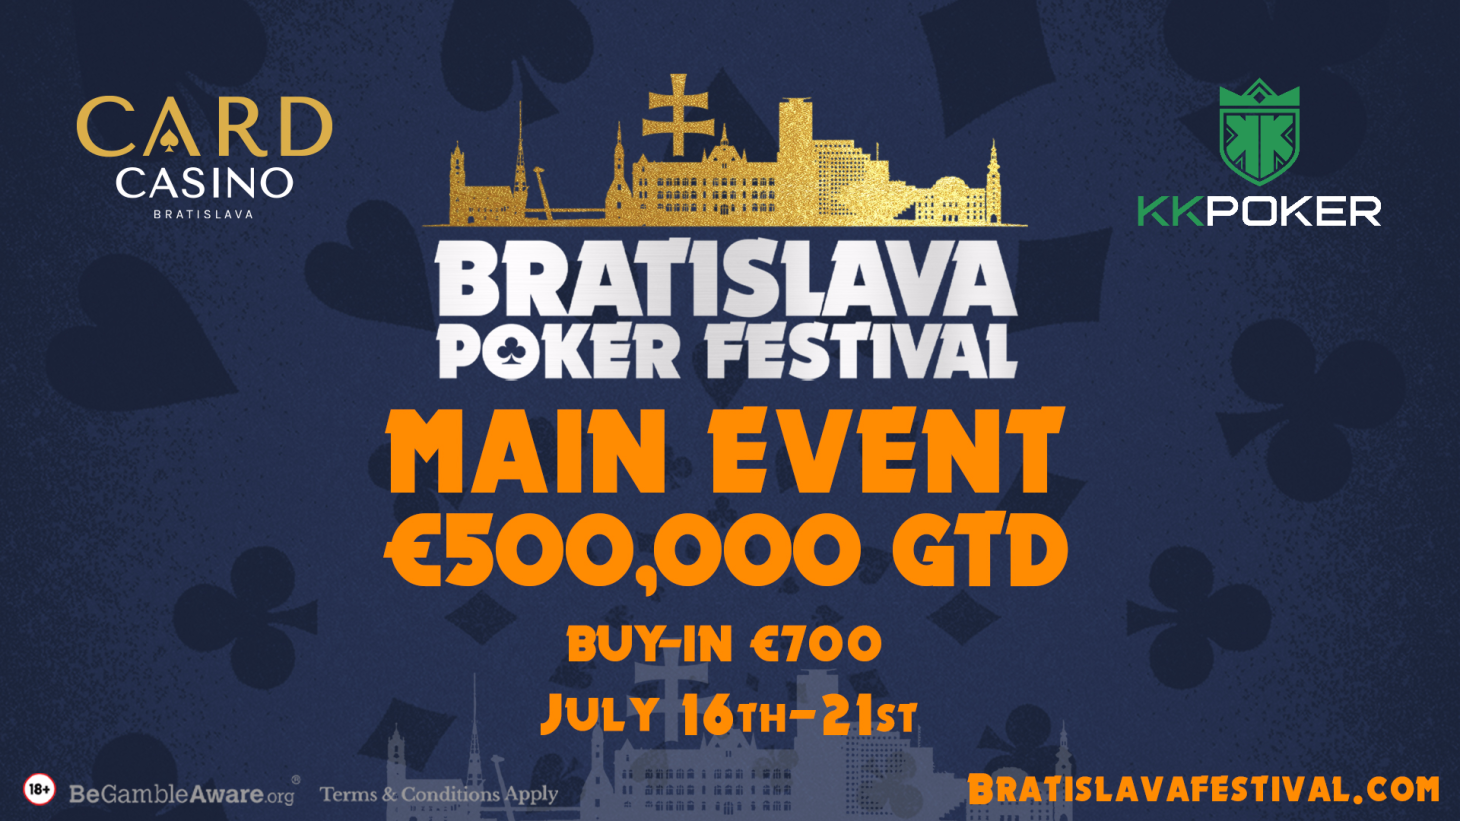 Bratislava Poker Festival kicks off with €500,000 GTD Main!